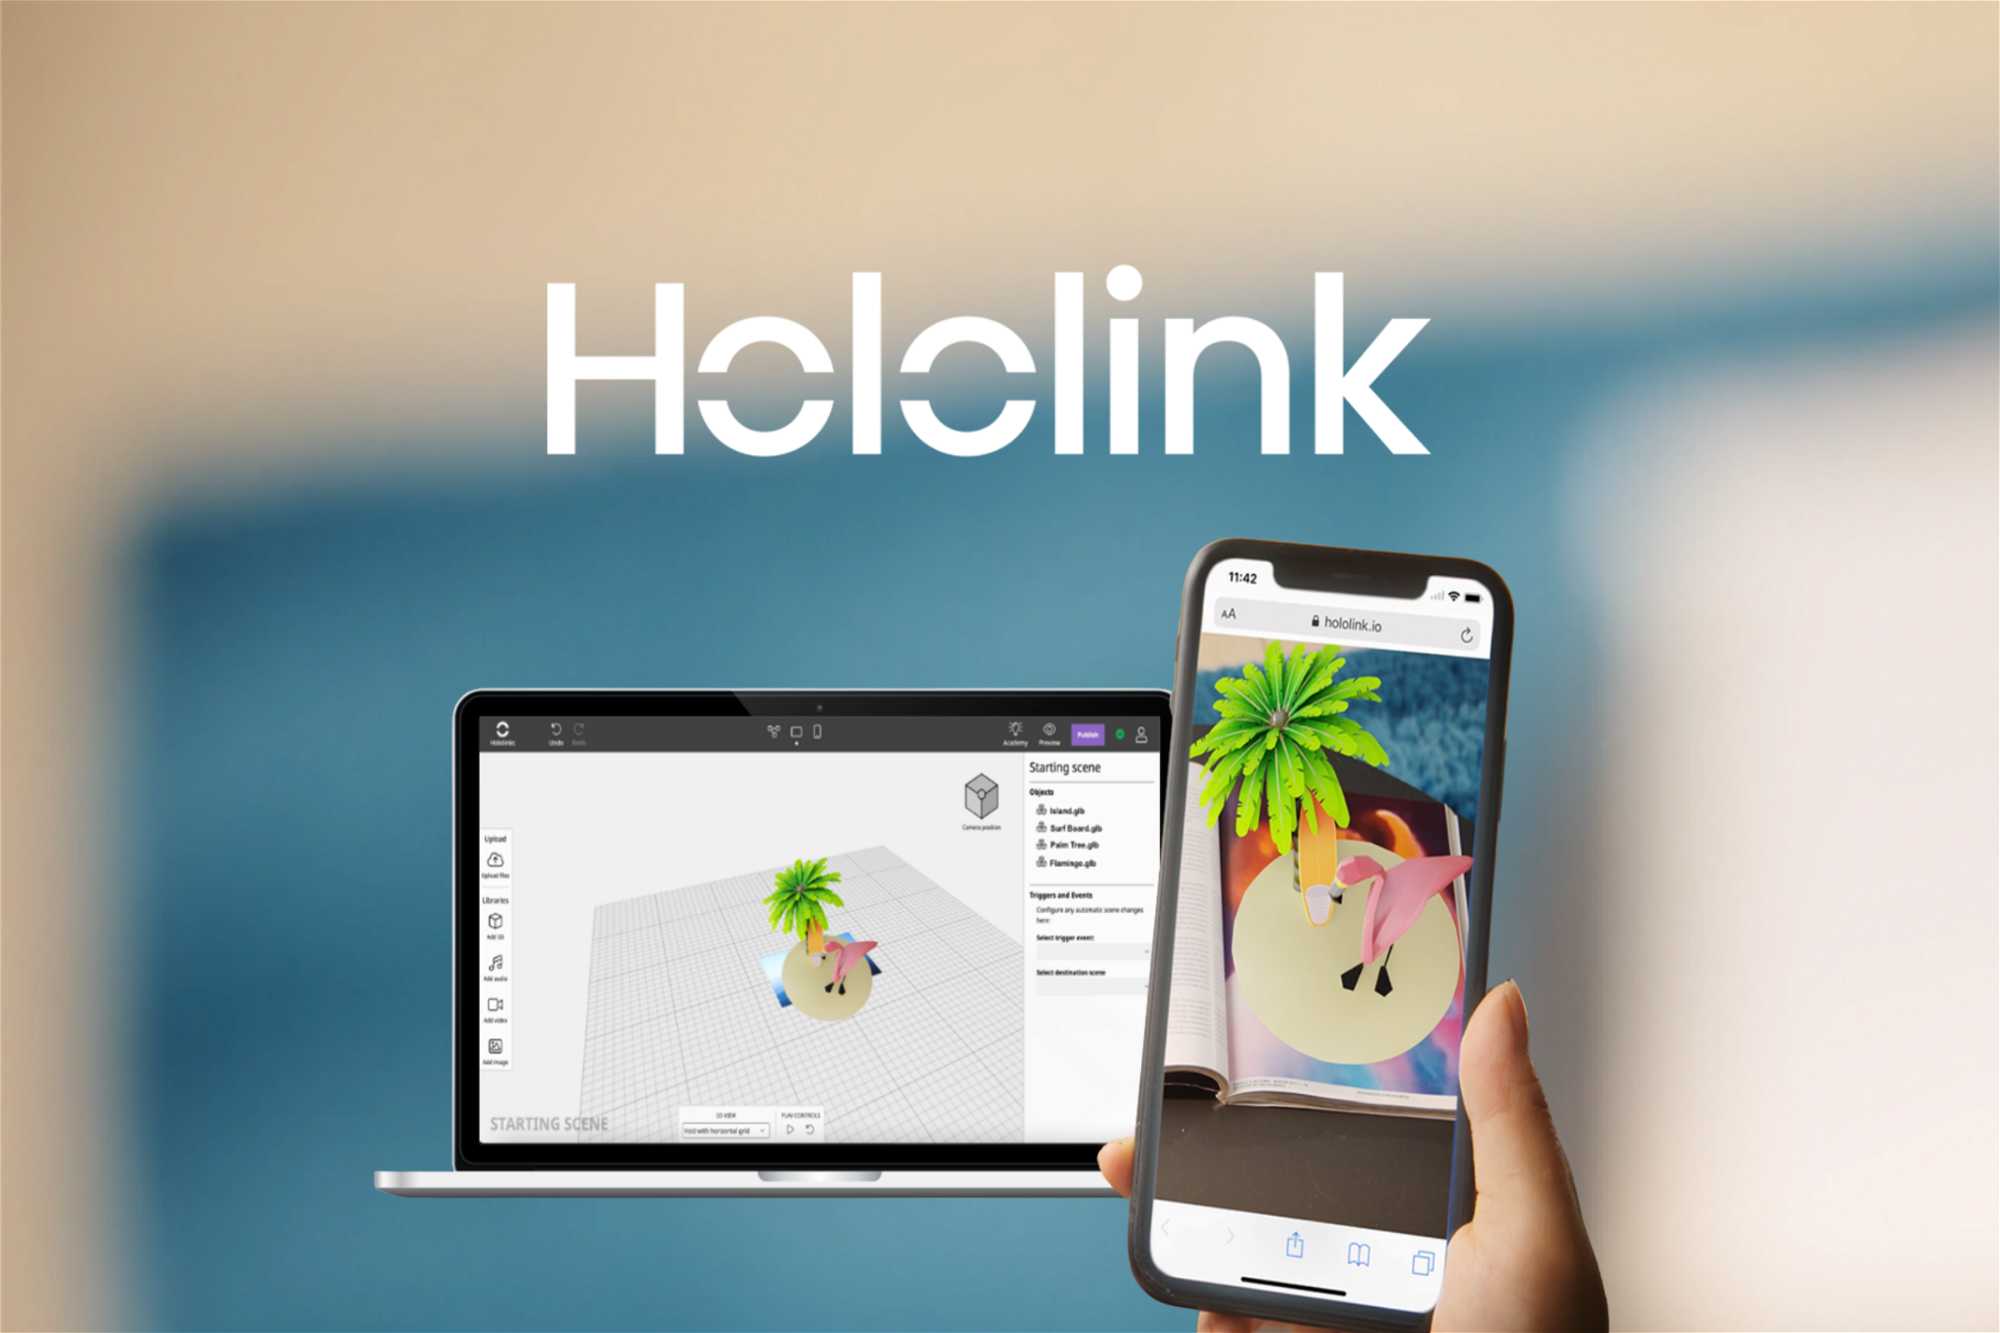 AppSumo Deal for Hololink